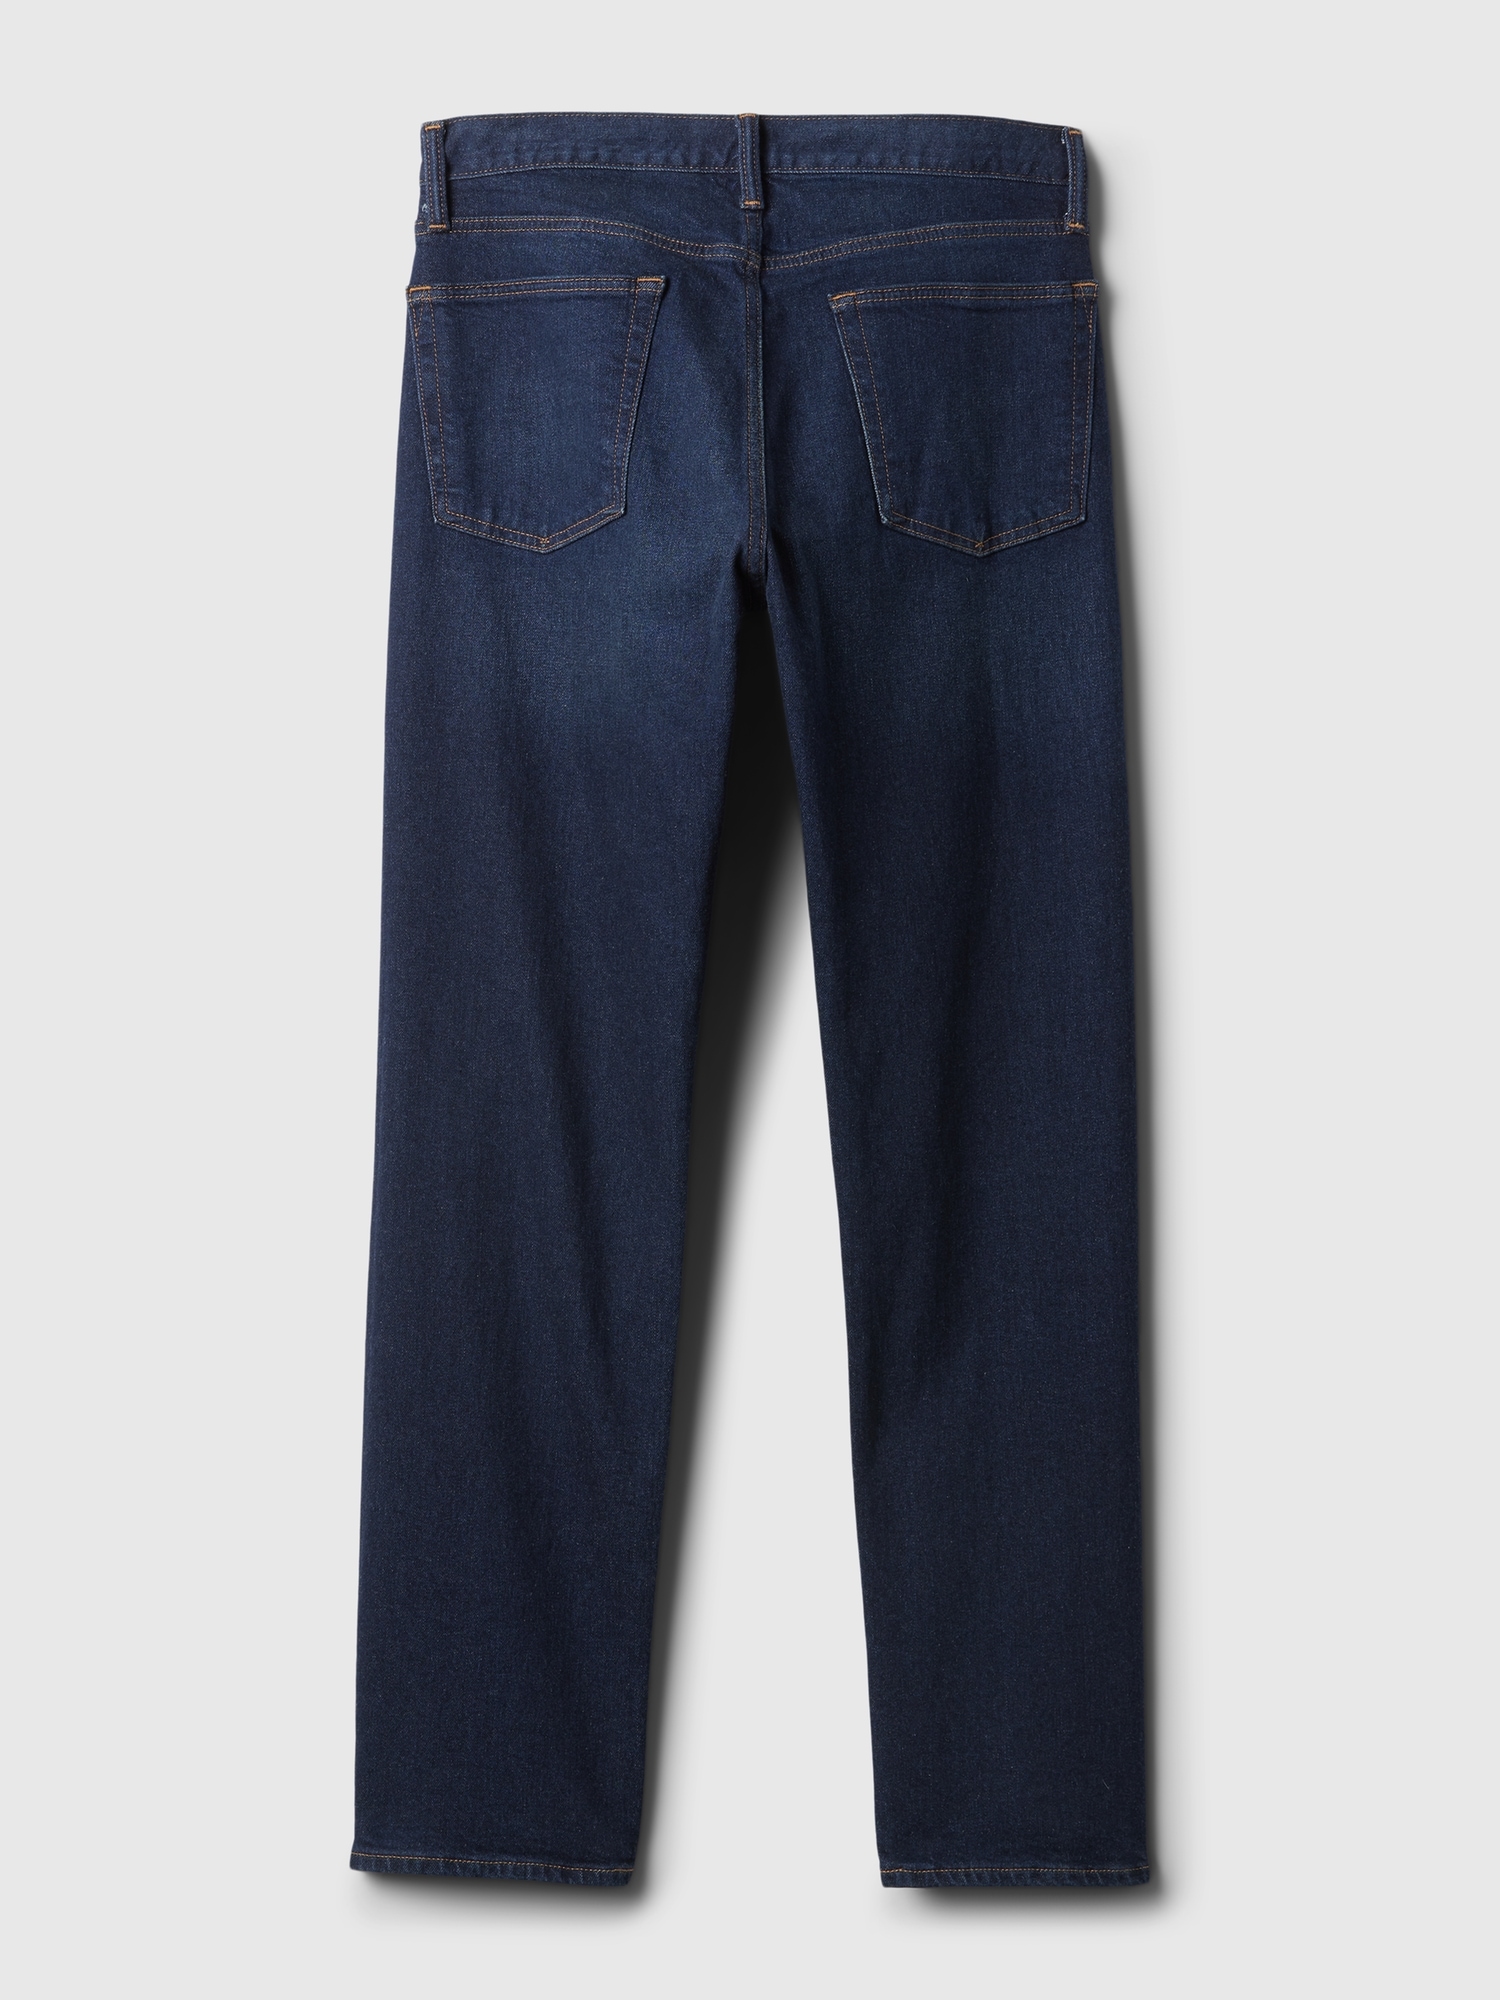 Buy GAP Blue Mens Straight Fit Dark Wash Jeans